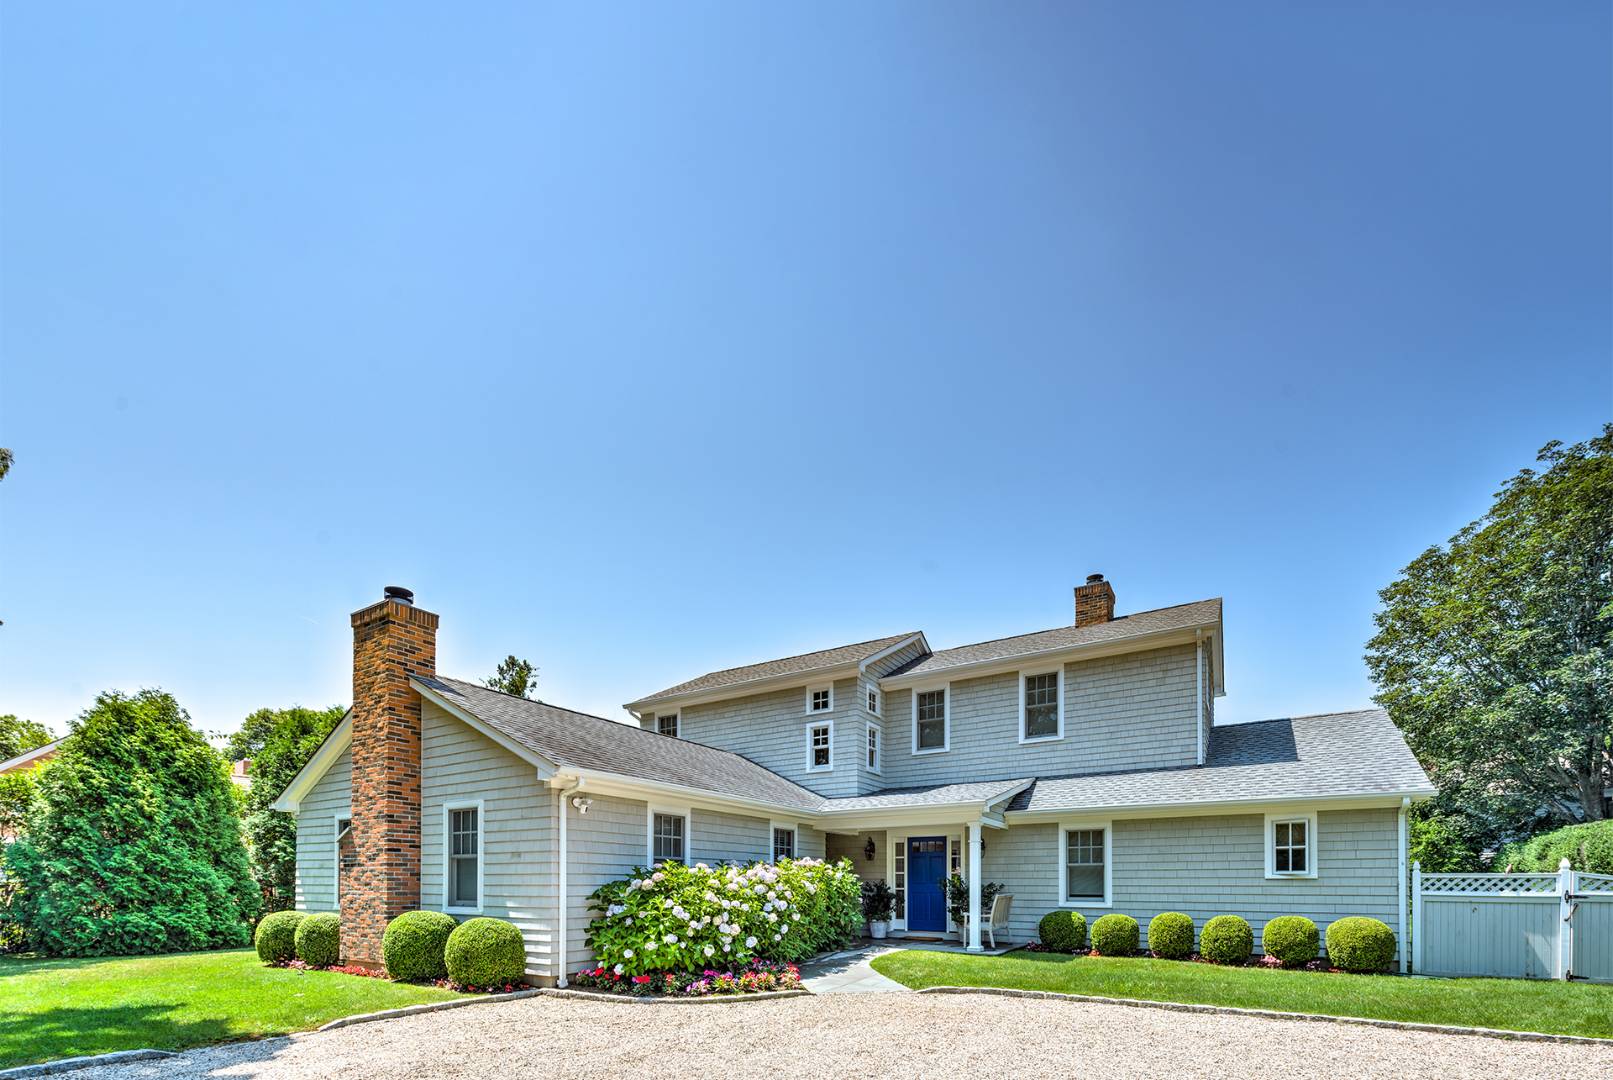 Rental Property at Village Of Southampton, Village Of Southampton, Hamptons, NY - Bedrooms: 5 
Bathrooms: 5  - $295,000 MO.